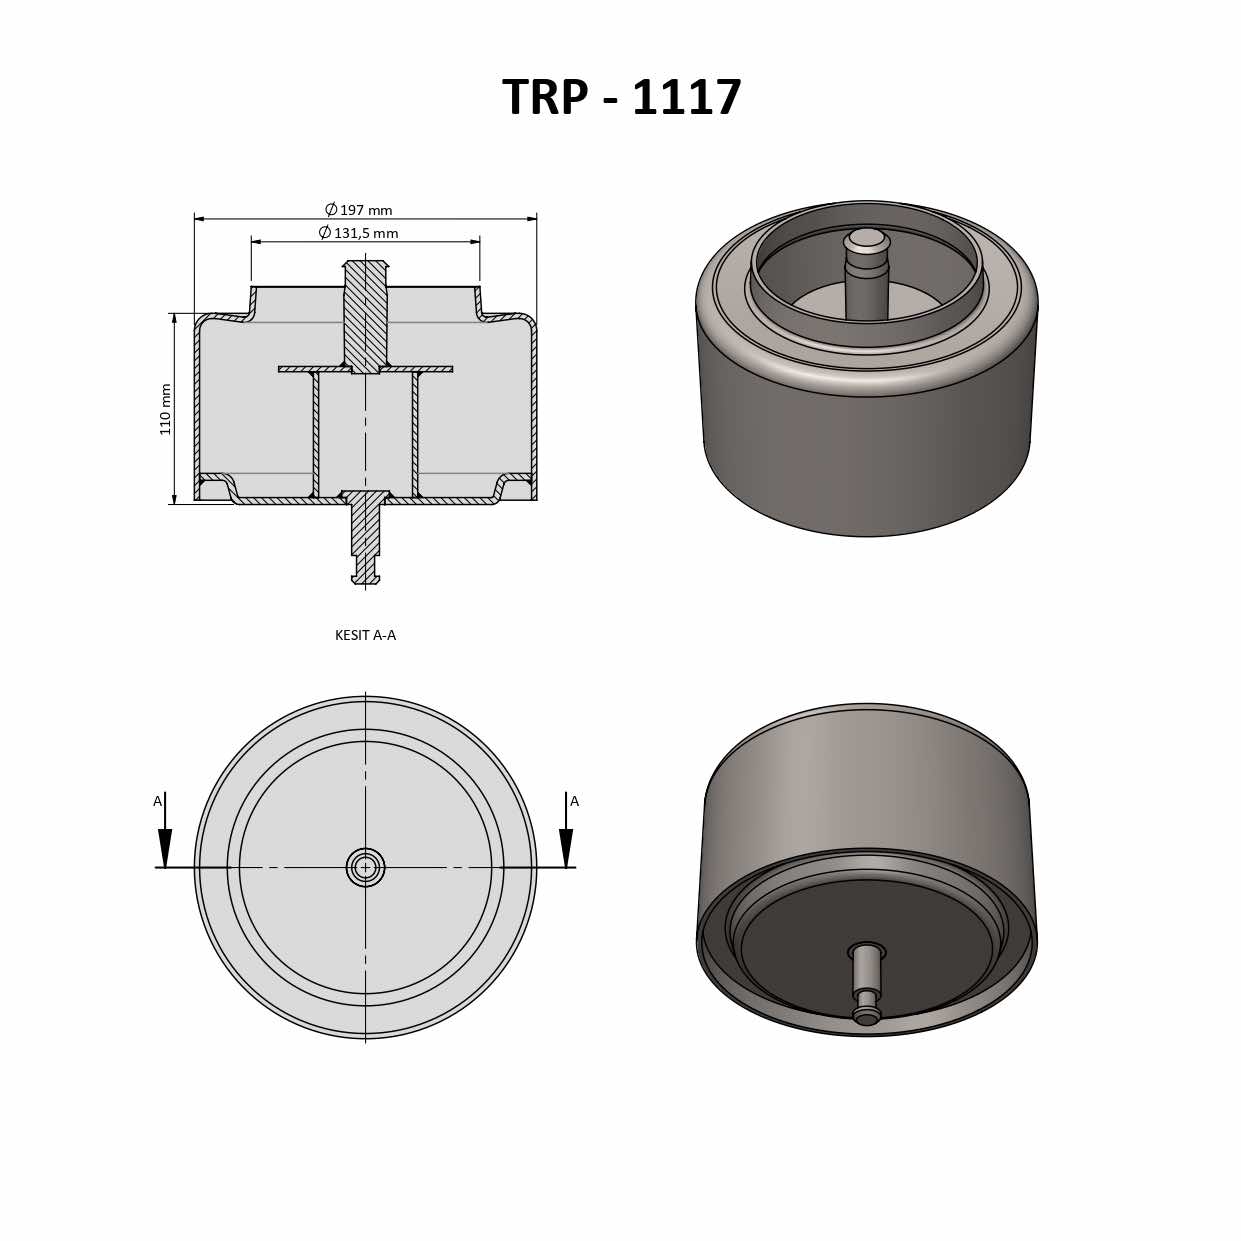 TRP-1117